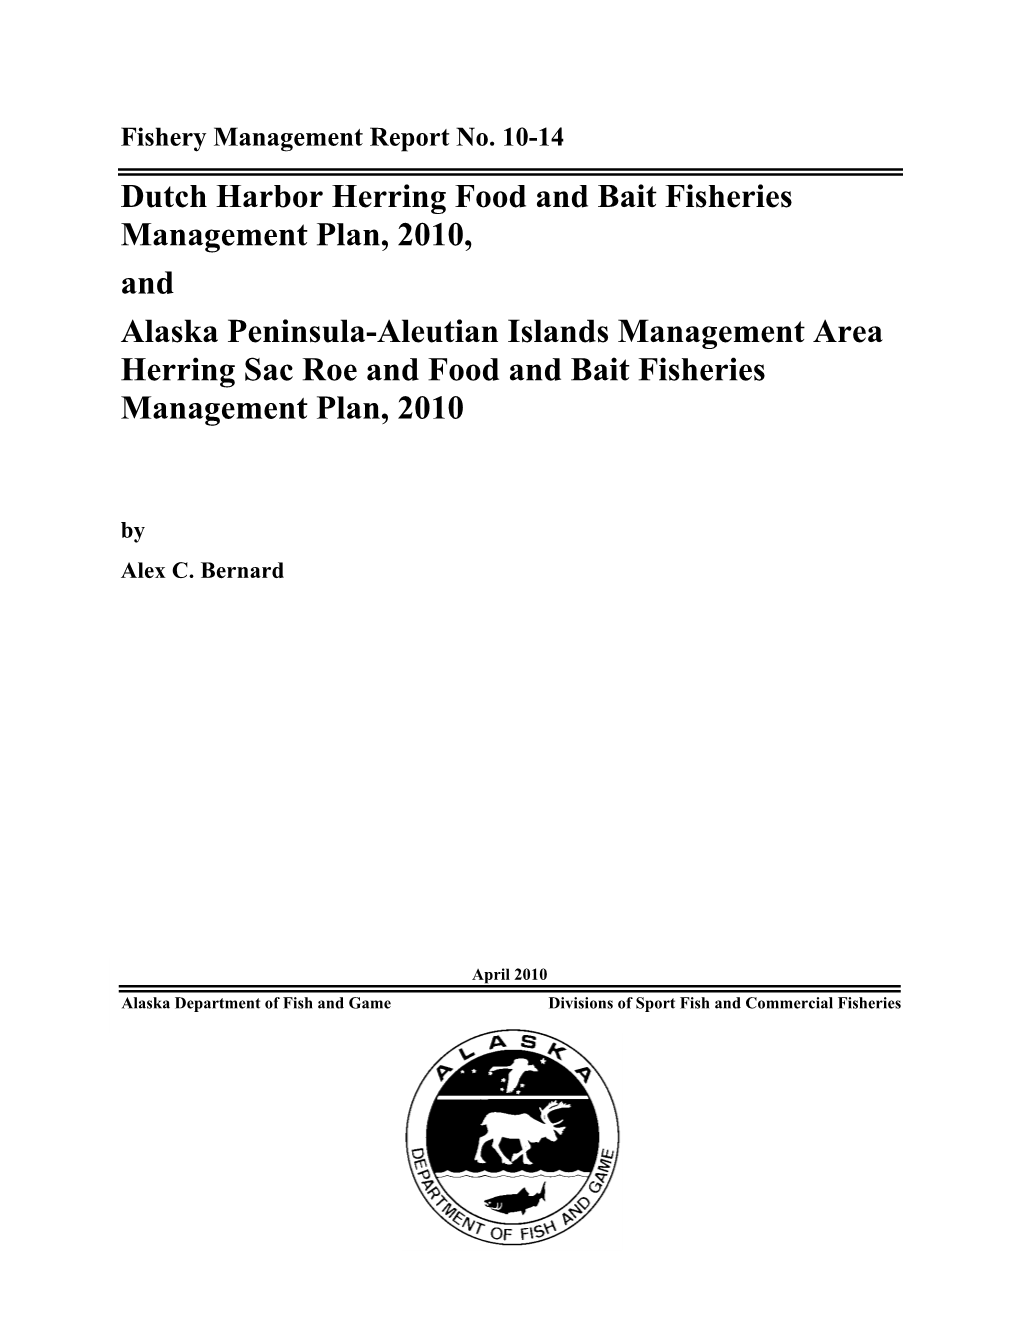 The Alaska Peninsula-Aleutian Islands (Dutch Harbor) Herring Food and Bait Fishery